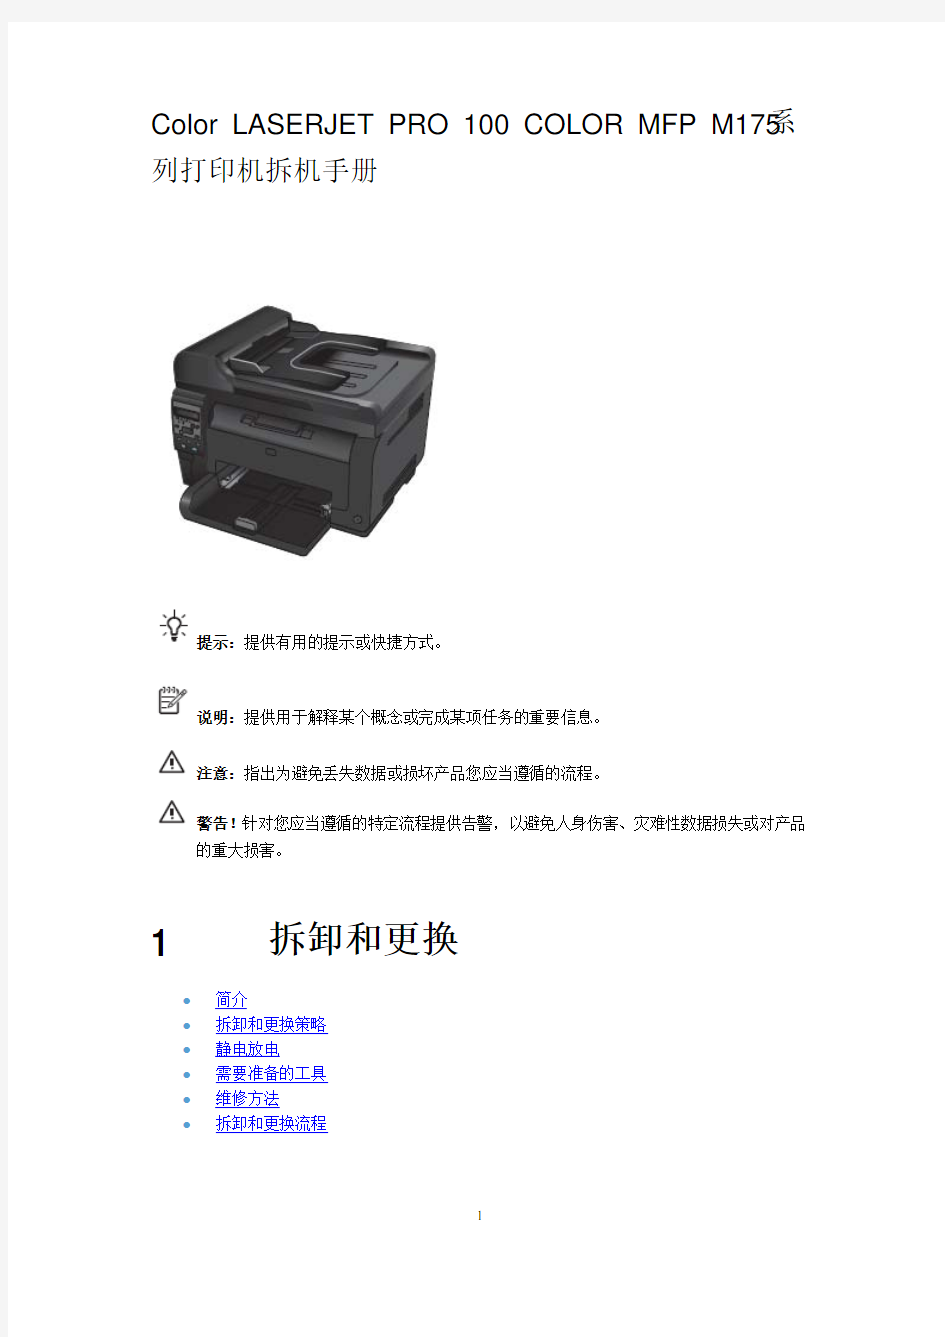 ColorLaserjetProMFPM系列打印机拆机手册